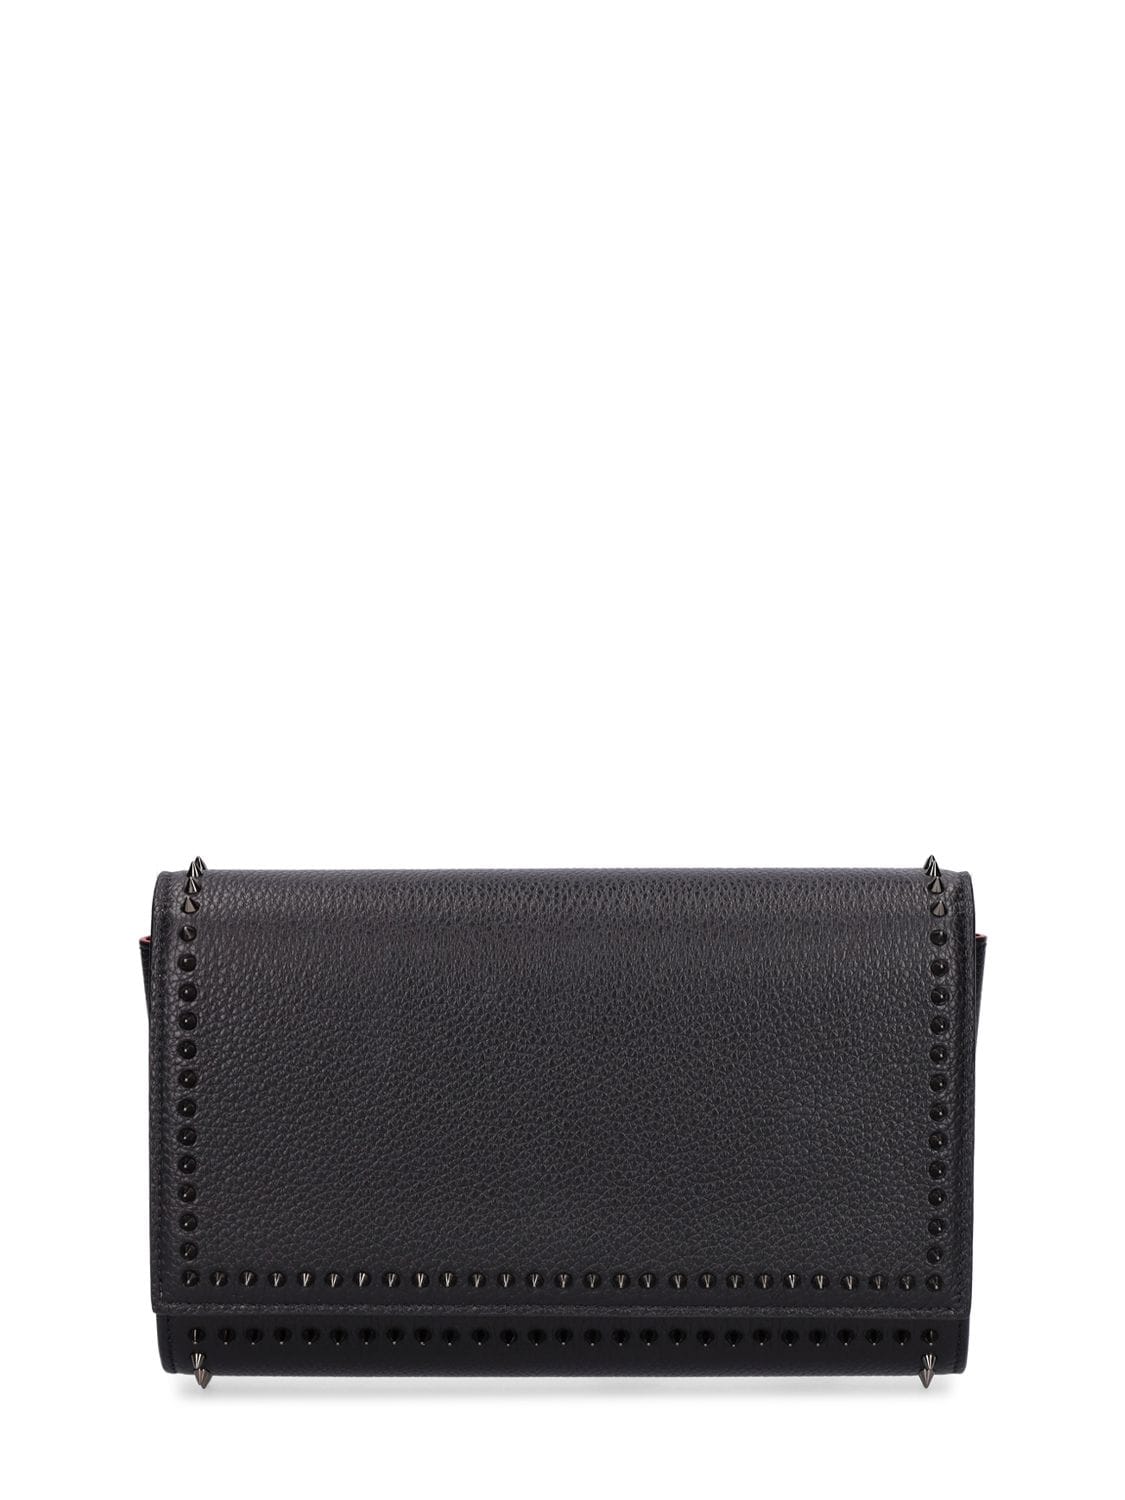 Christian Louboutin Paloma Mini Leather Clutch Bag In Black,gunmetal